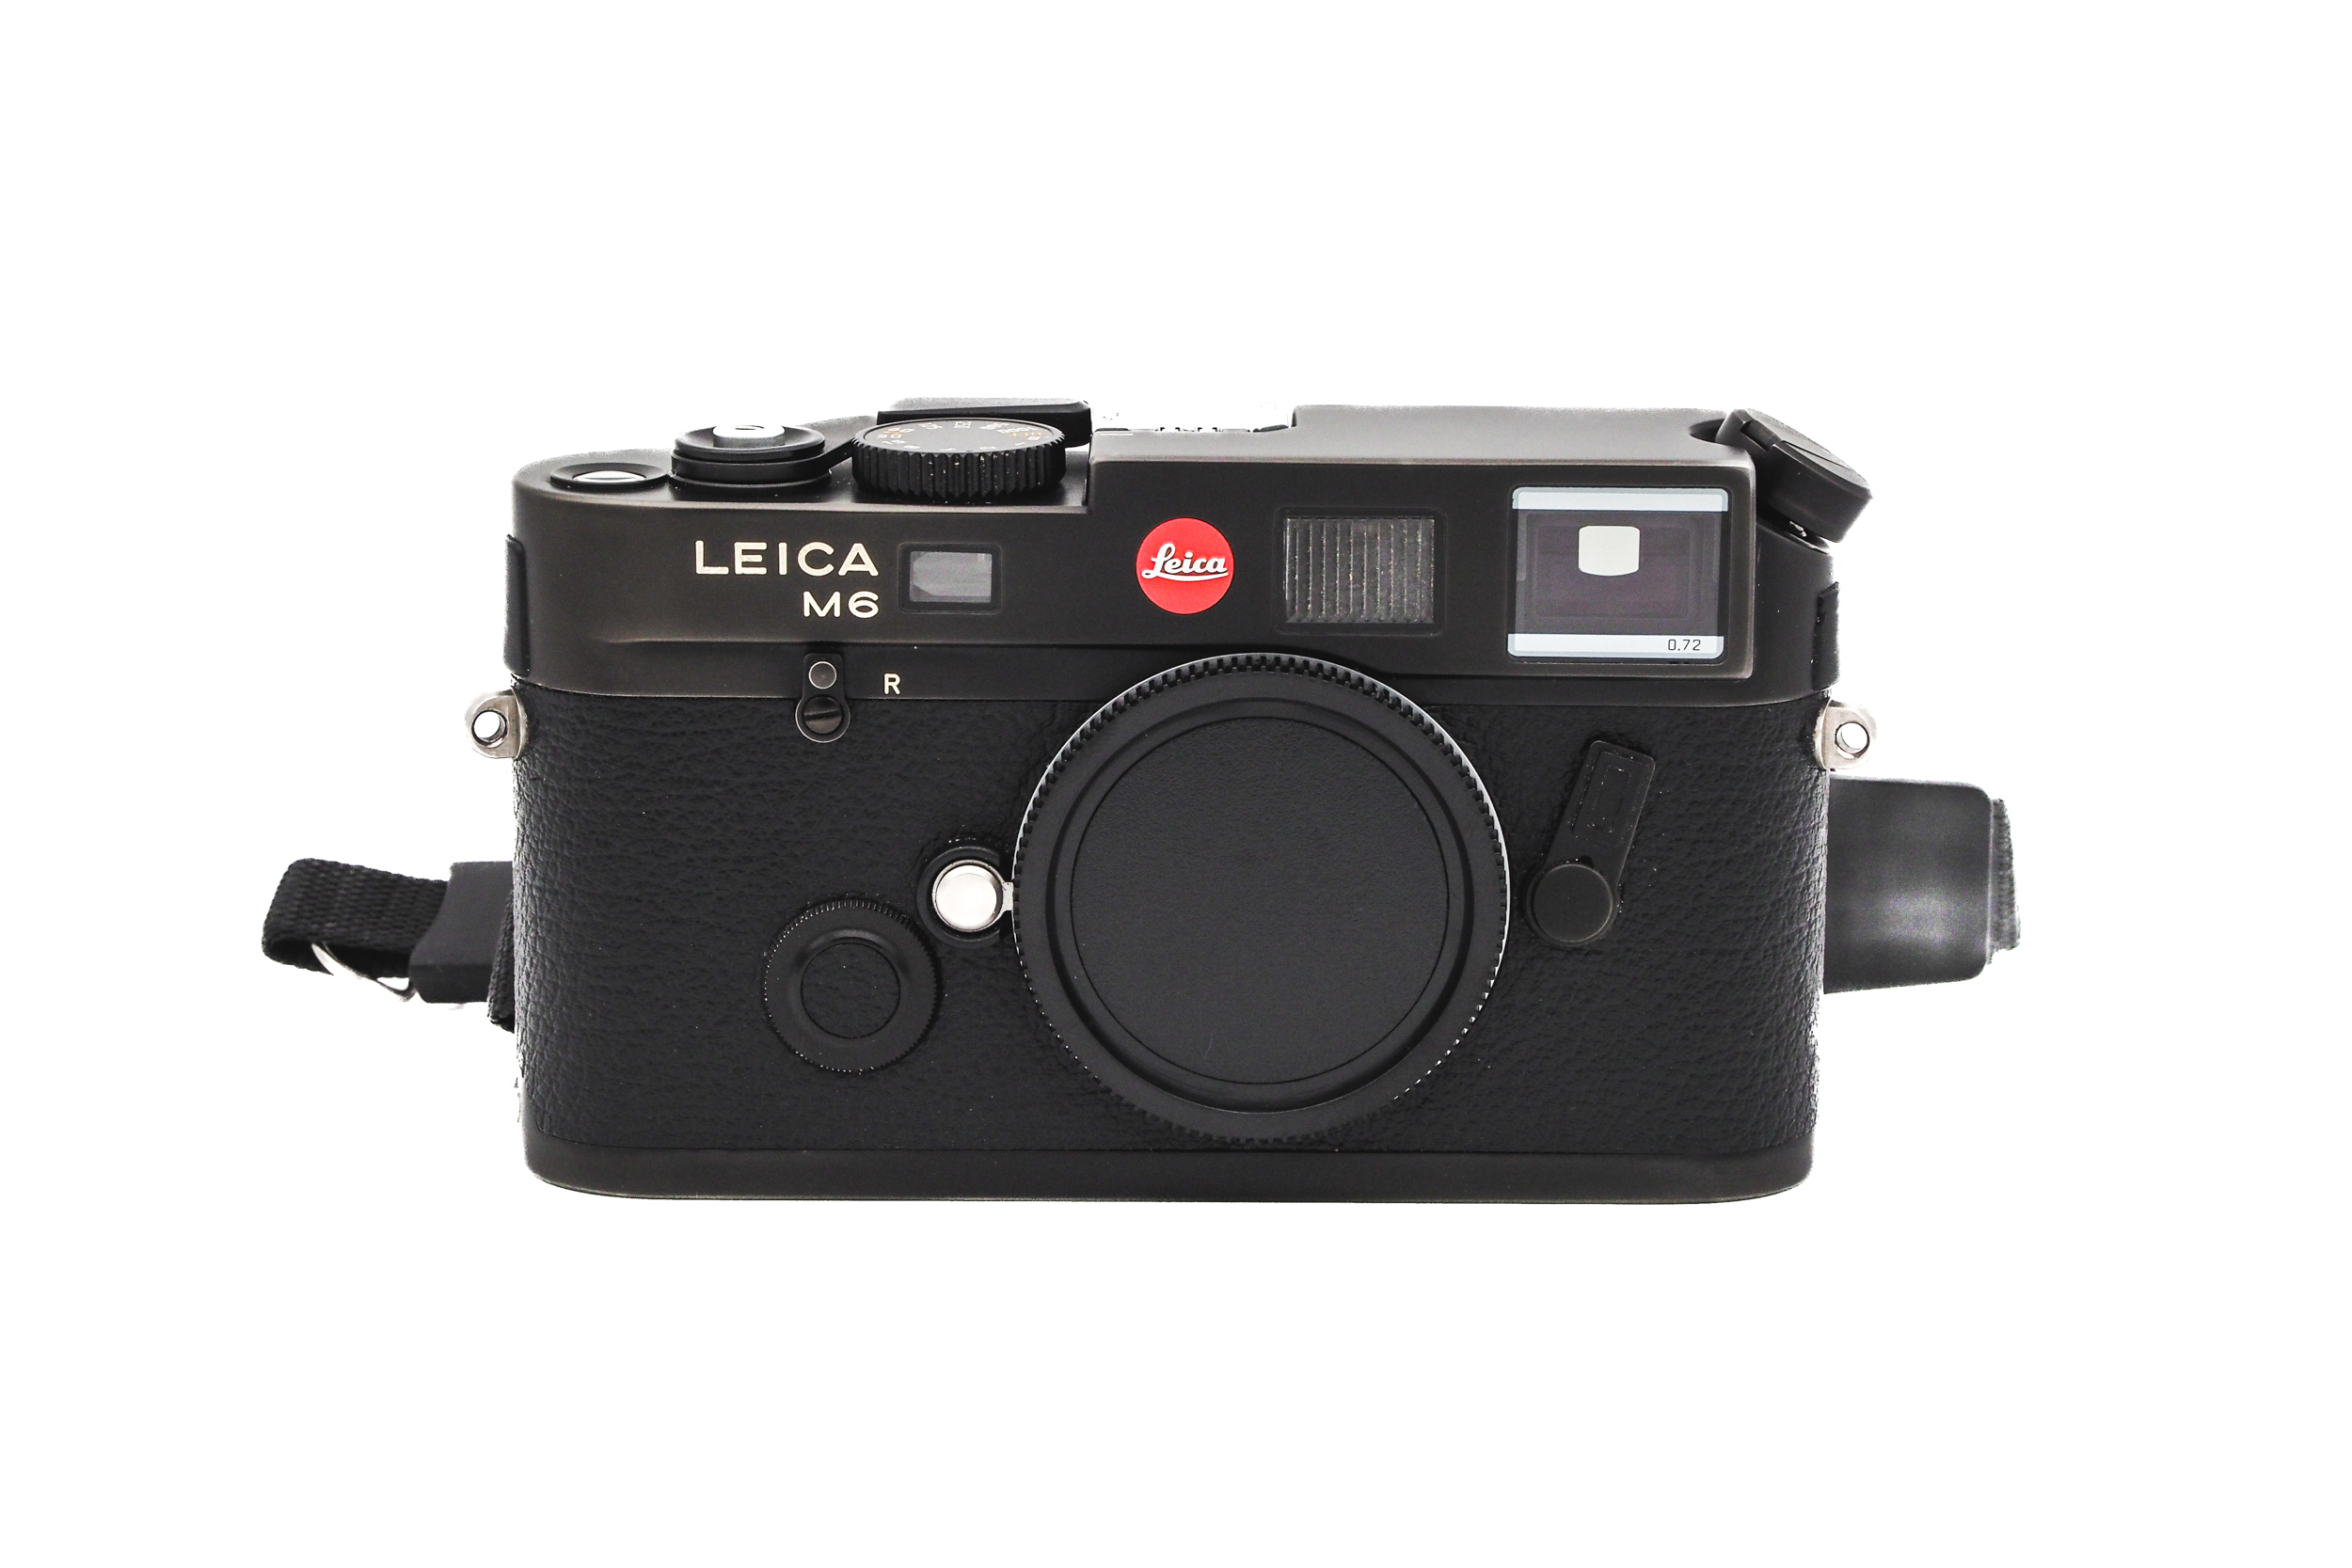 Leica M6 TTL 0.72 2001